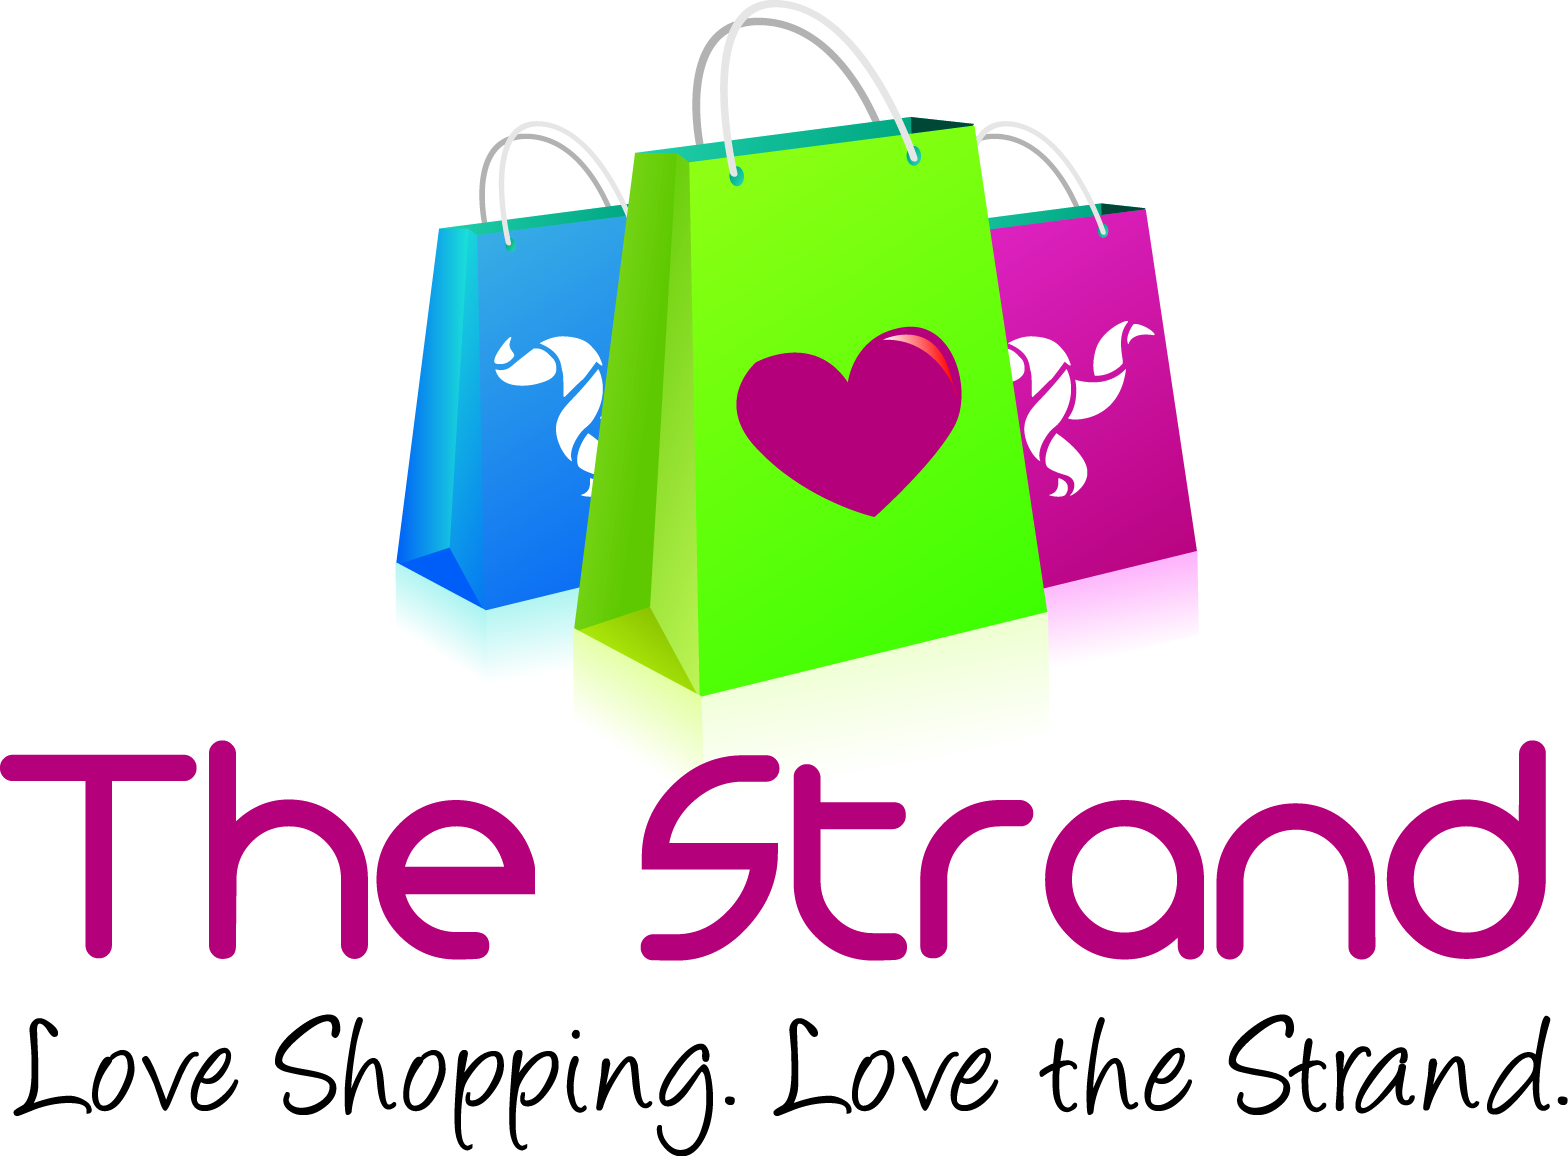 Shopping plus. Love to shop. Шоп. Shop to shop интернет магазин. Love is шоппинг.